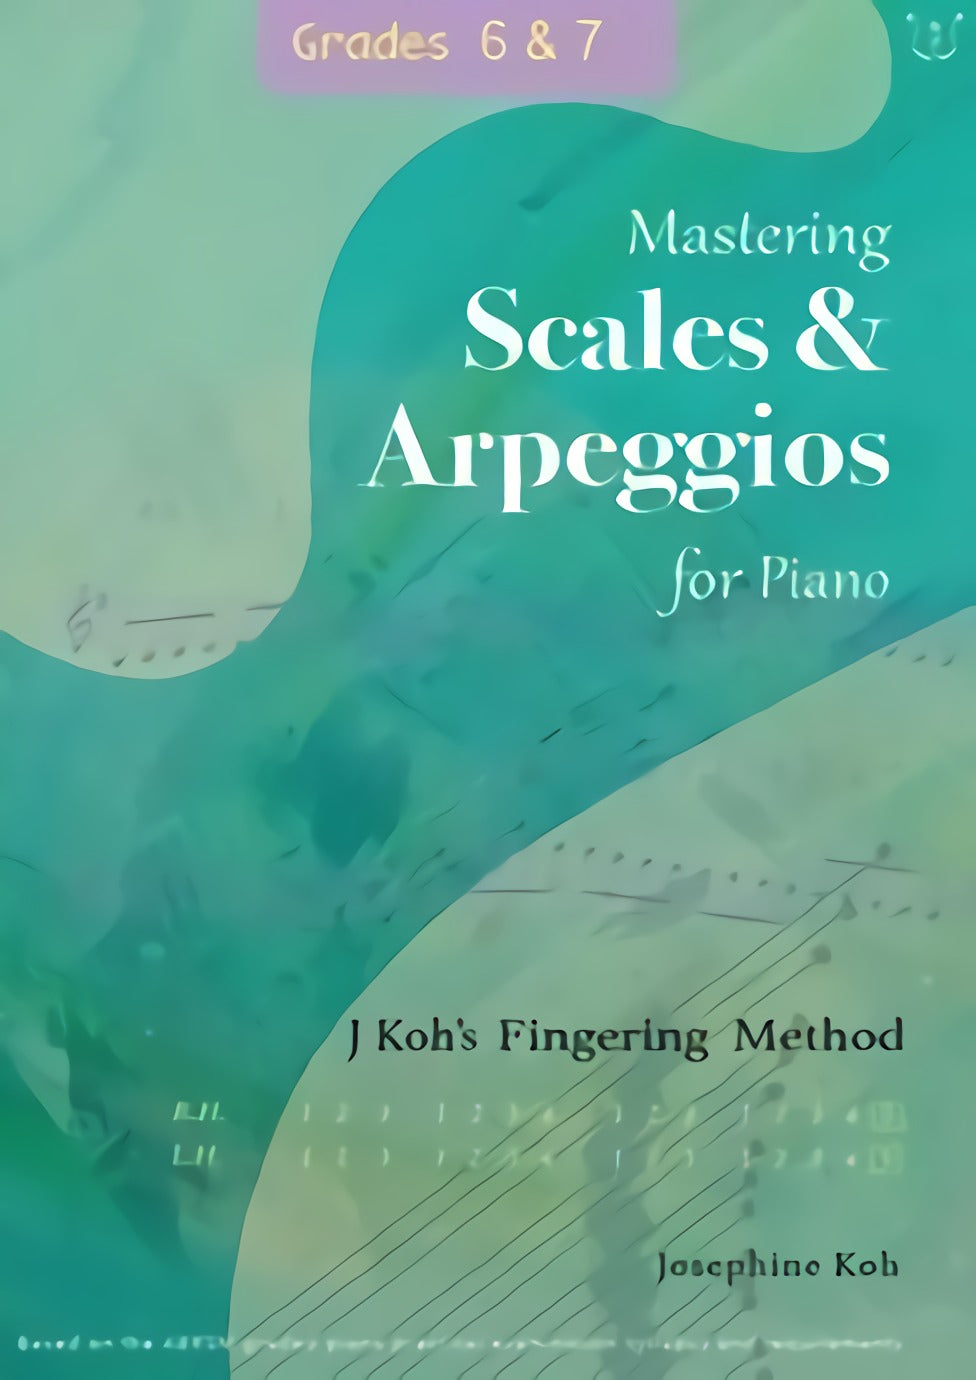 Mastering Scales and Arpeggios, J Koh's Fingering Method, Grades 6-7